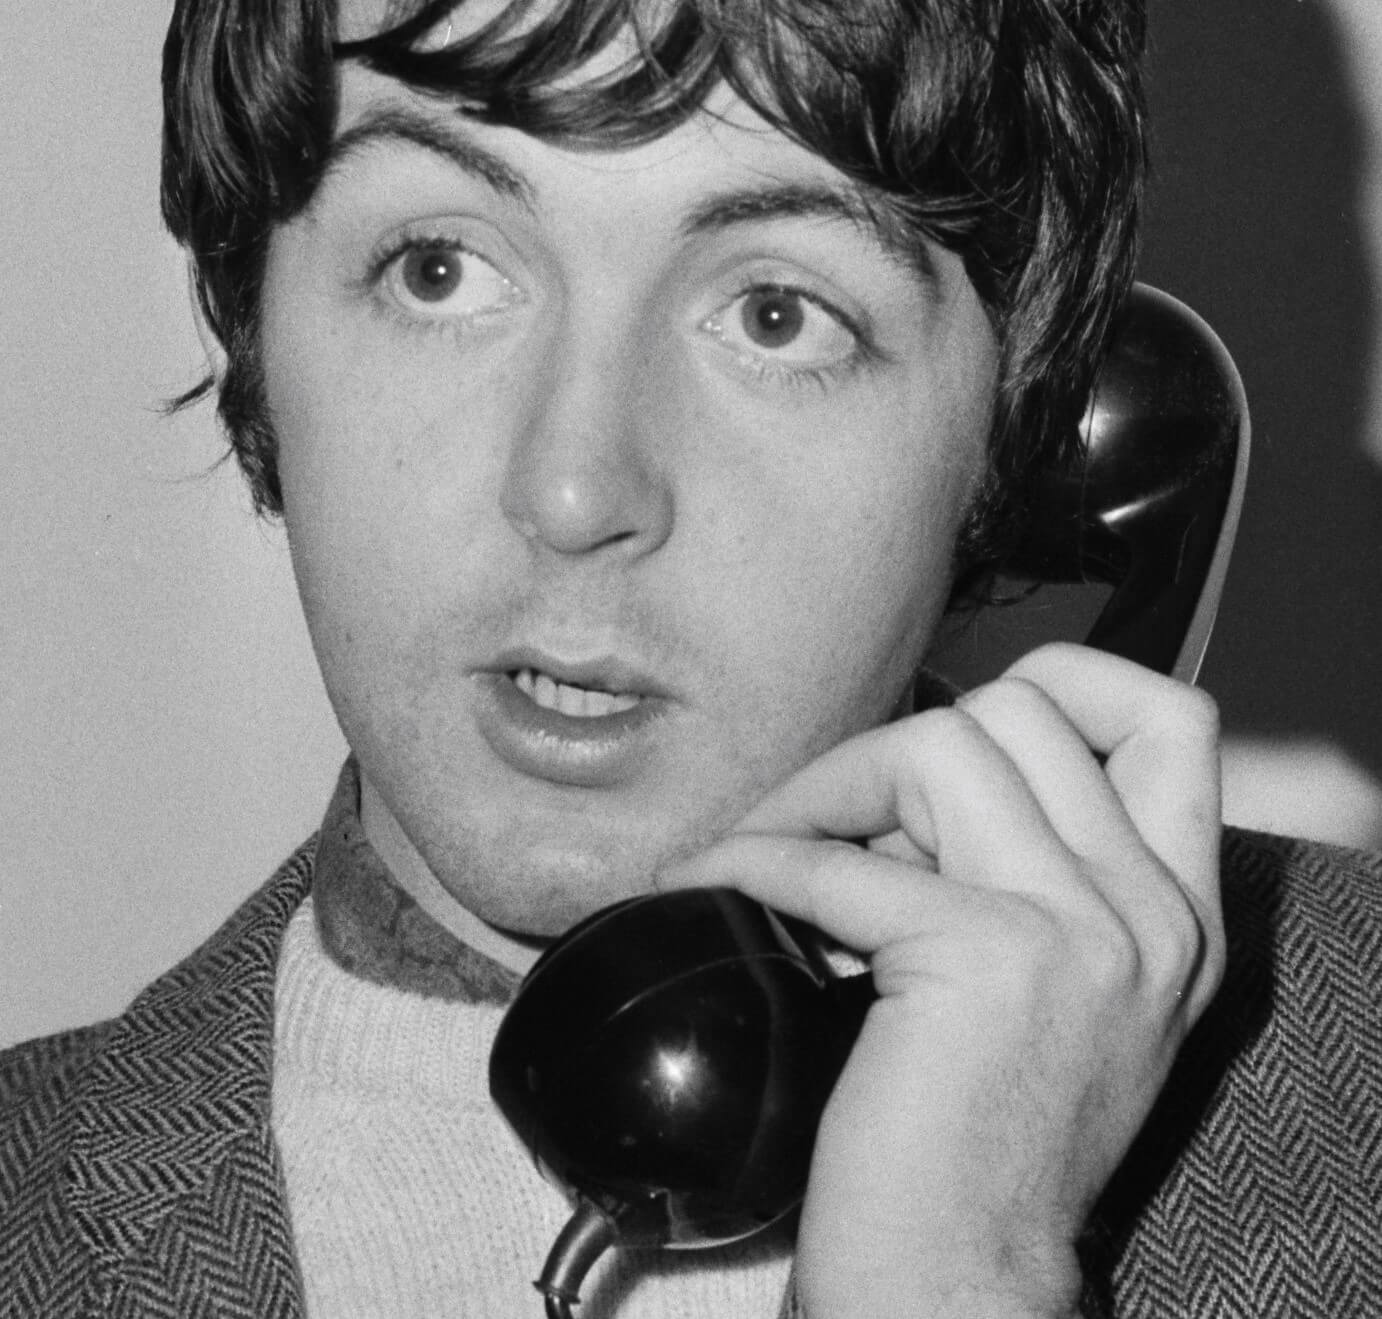 Paul McCartney with a telephone